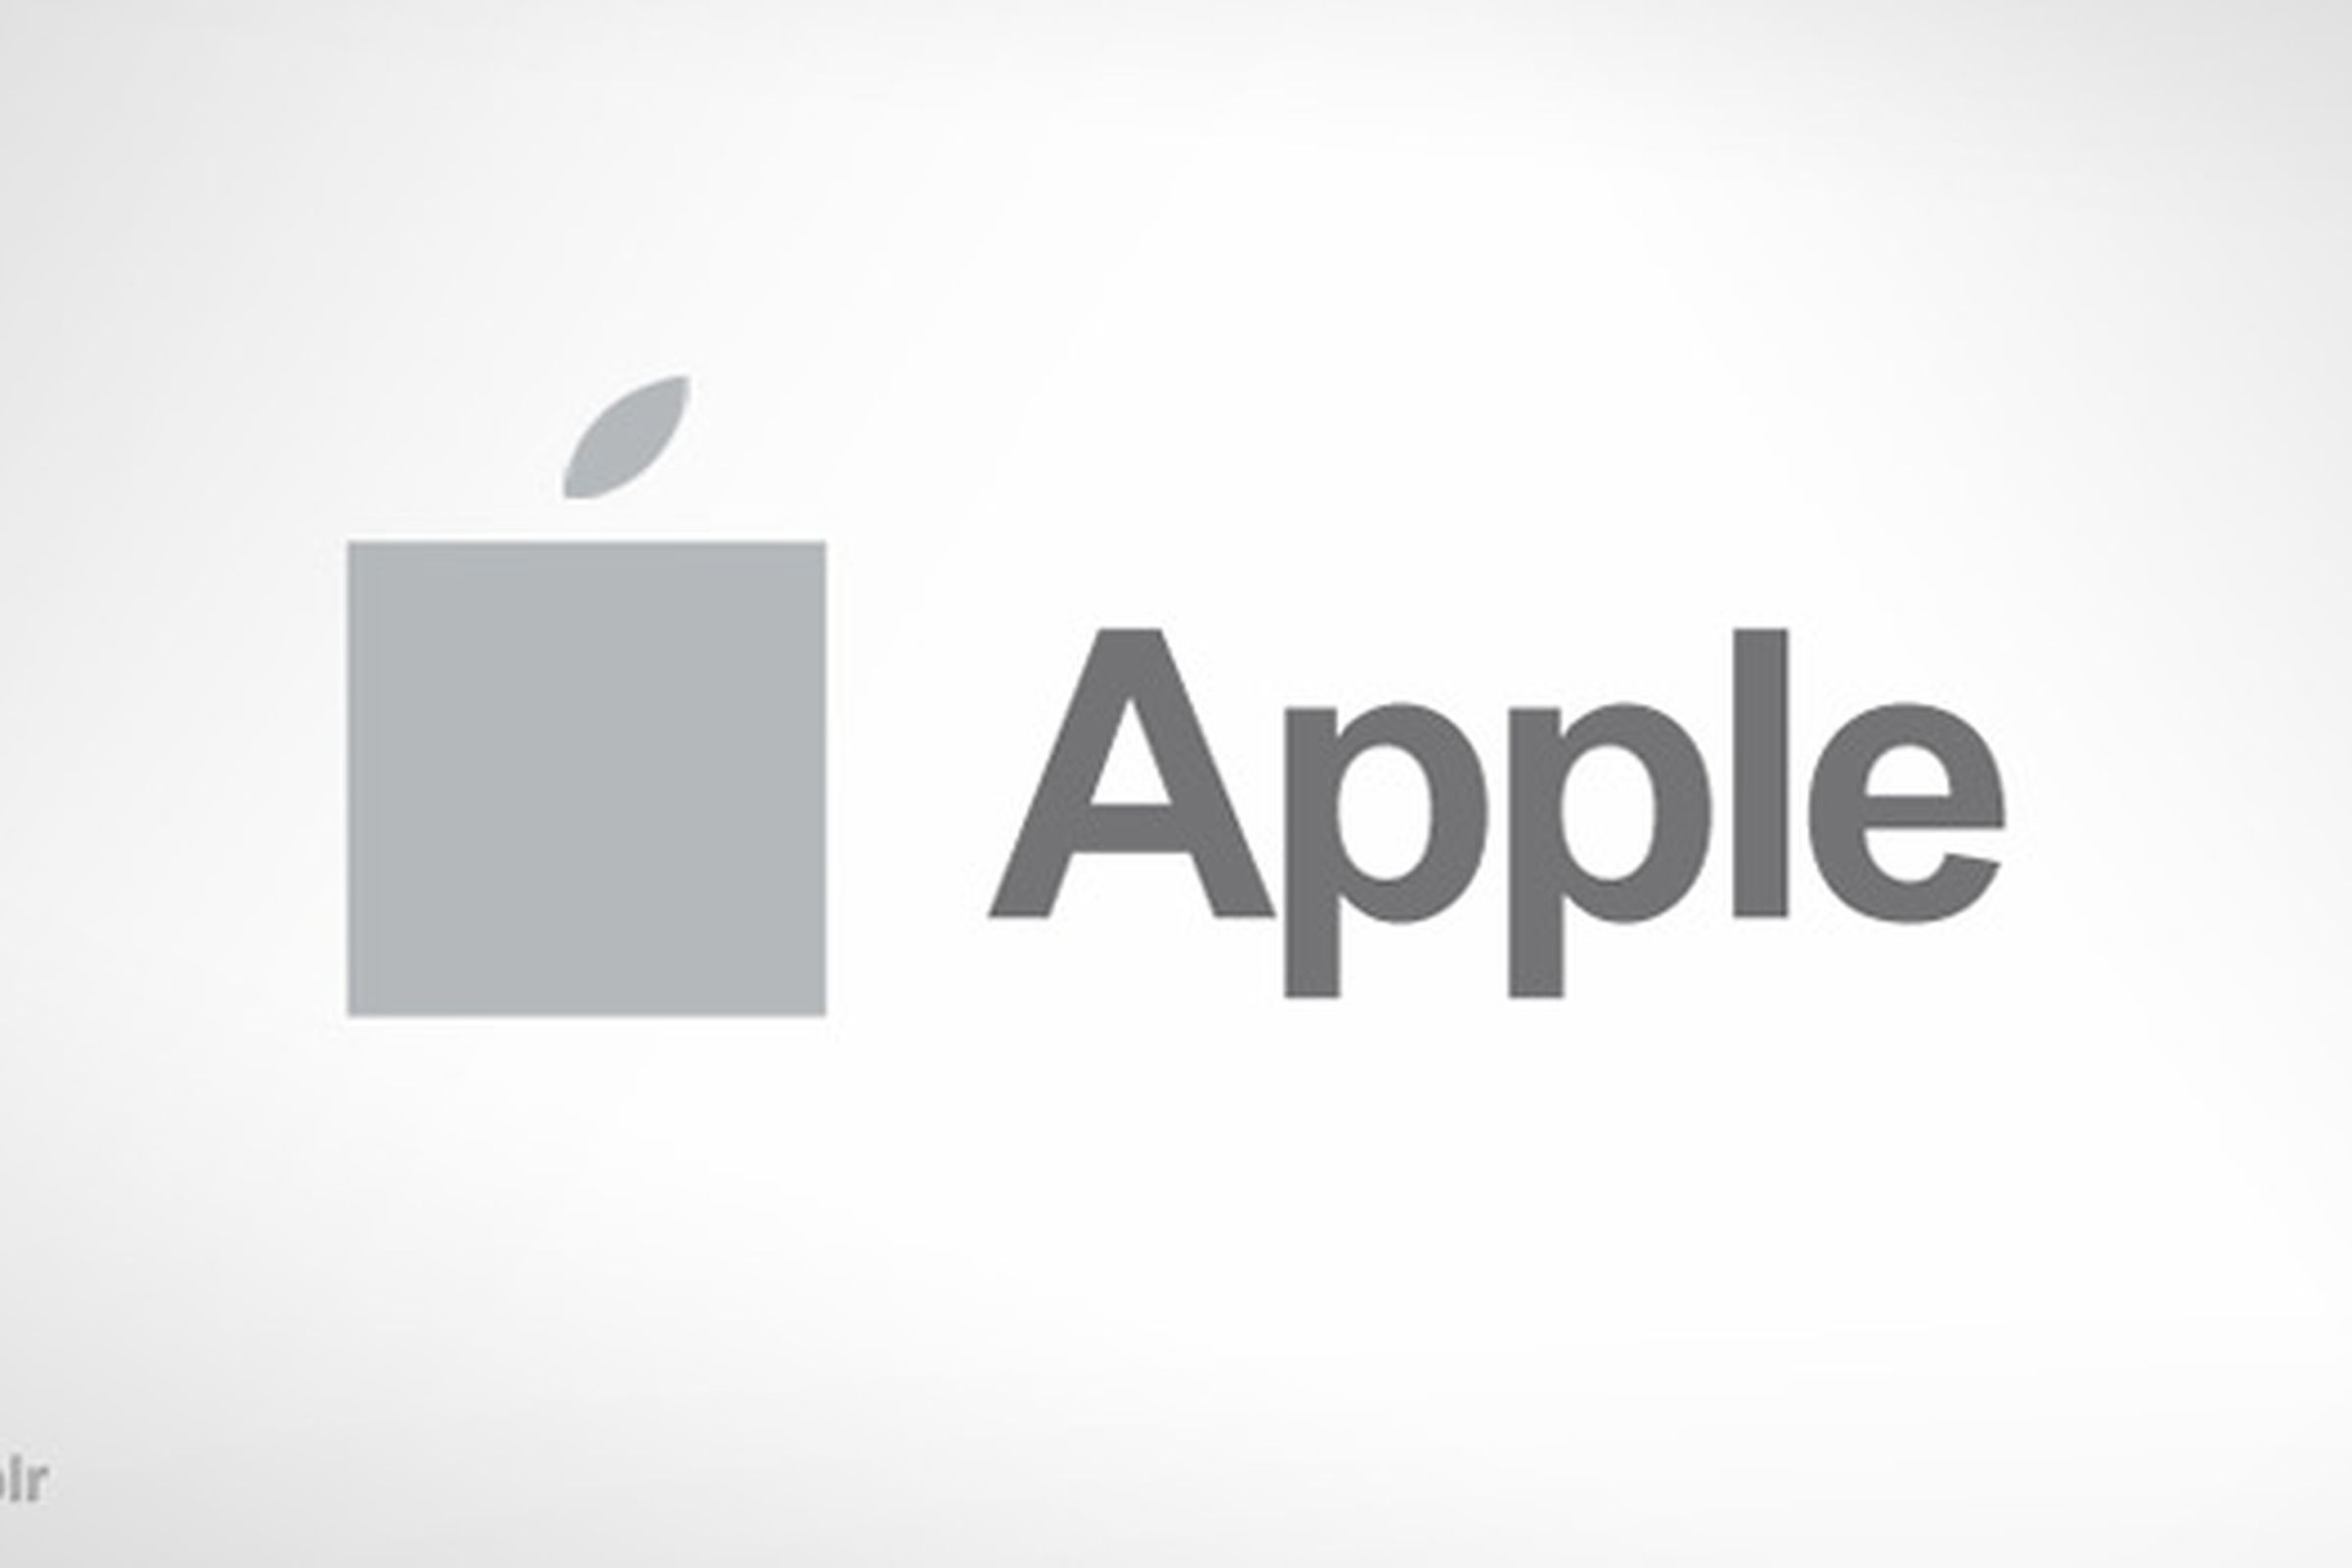 apple logo in ms style